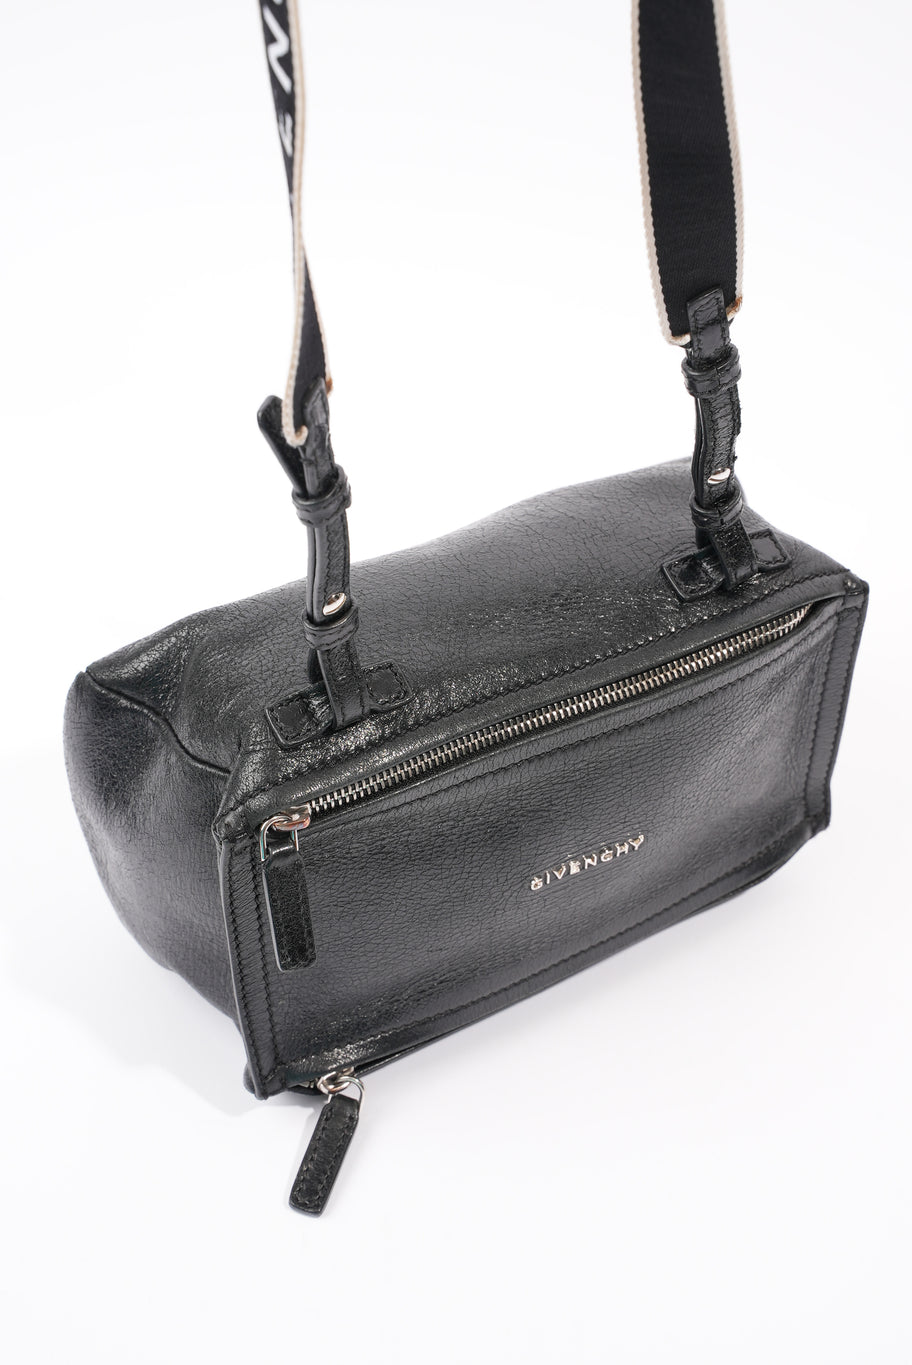 Pandora Bag Black Leather Small Image 7